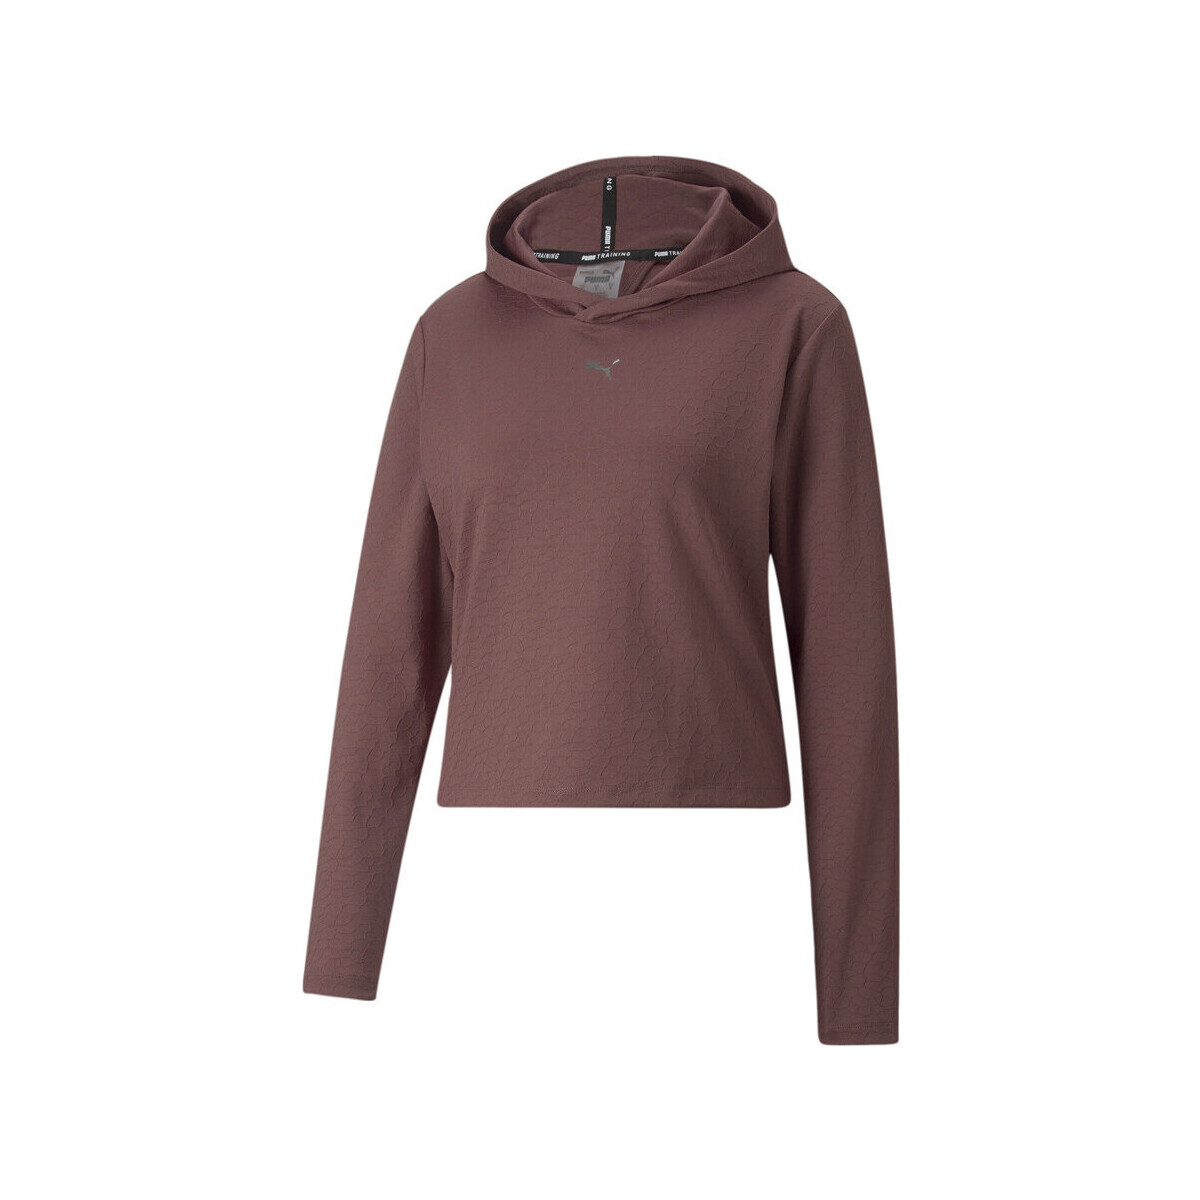 Textiel Dames Sweaters / Sweatshirts Puma  Violet